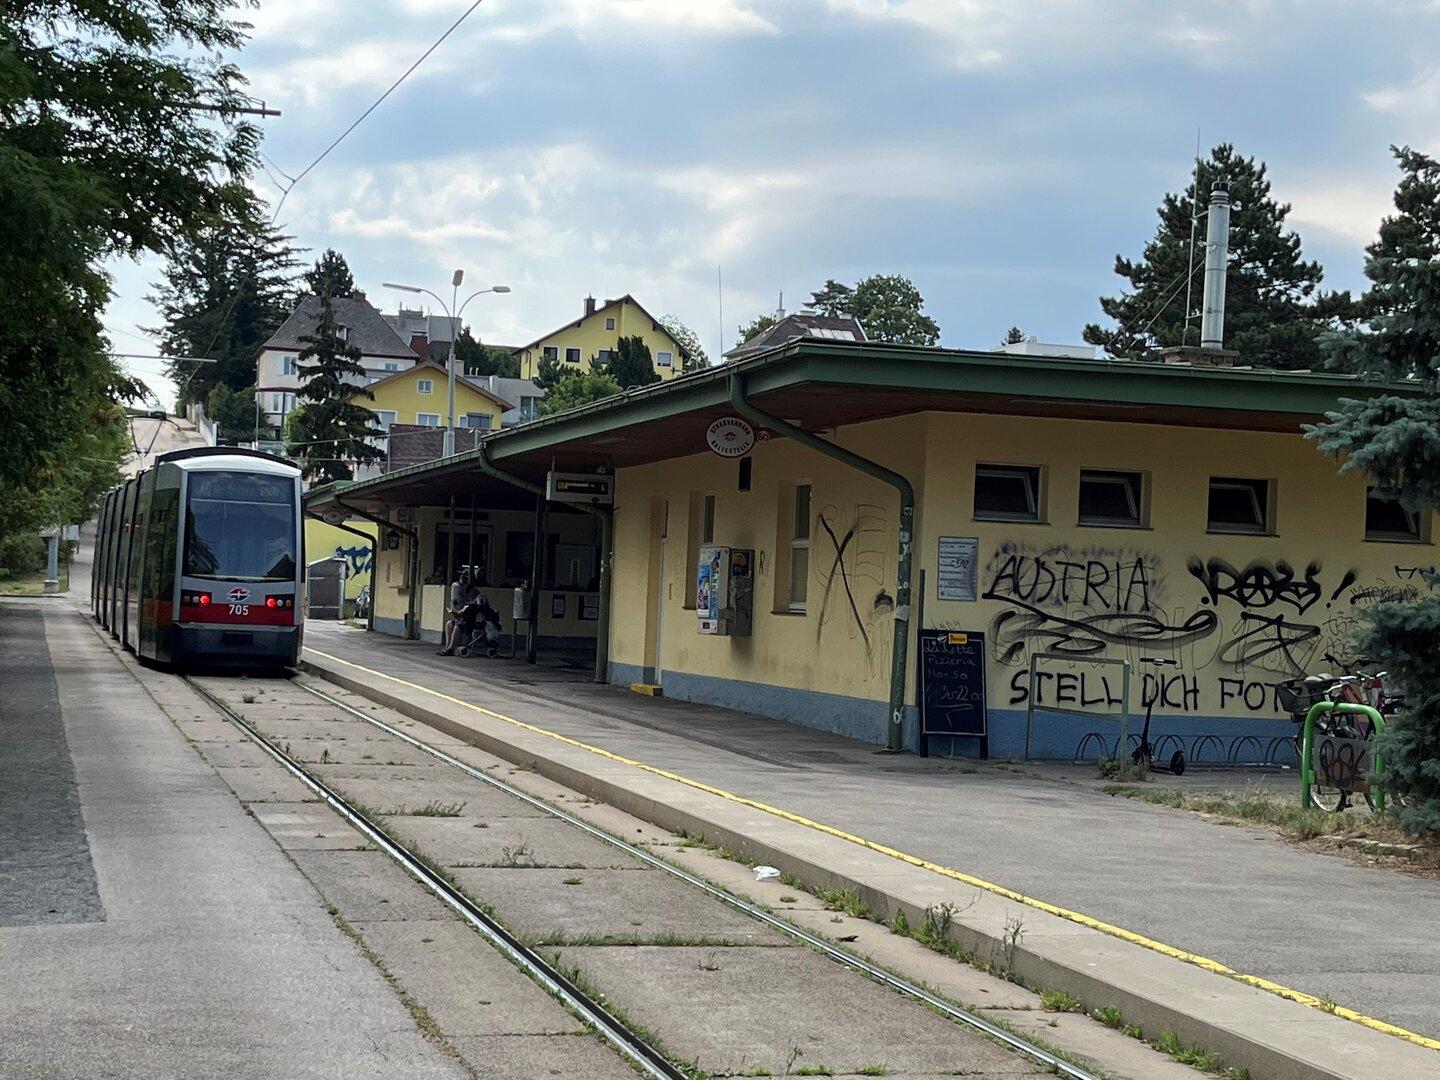 Endstation Rodaun: Das Dorf am Ende der Straßenbahn